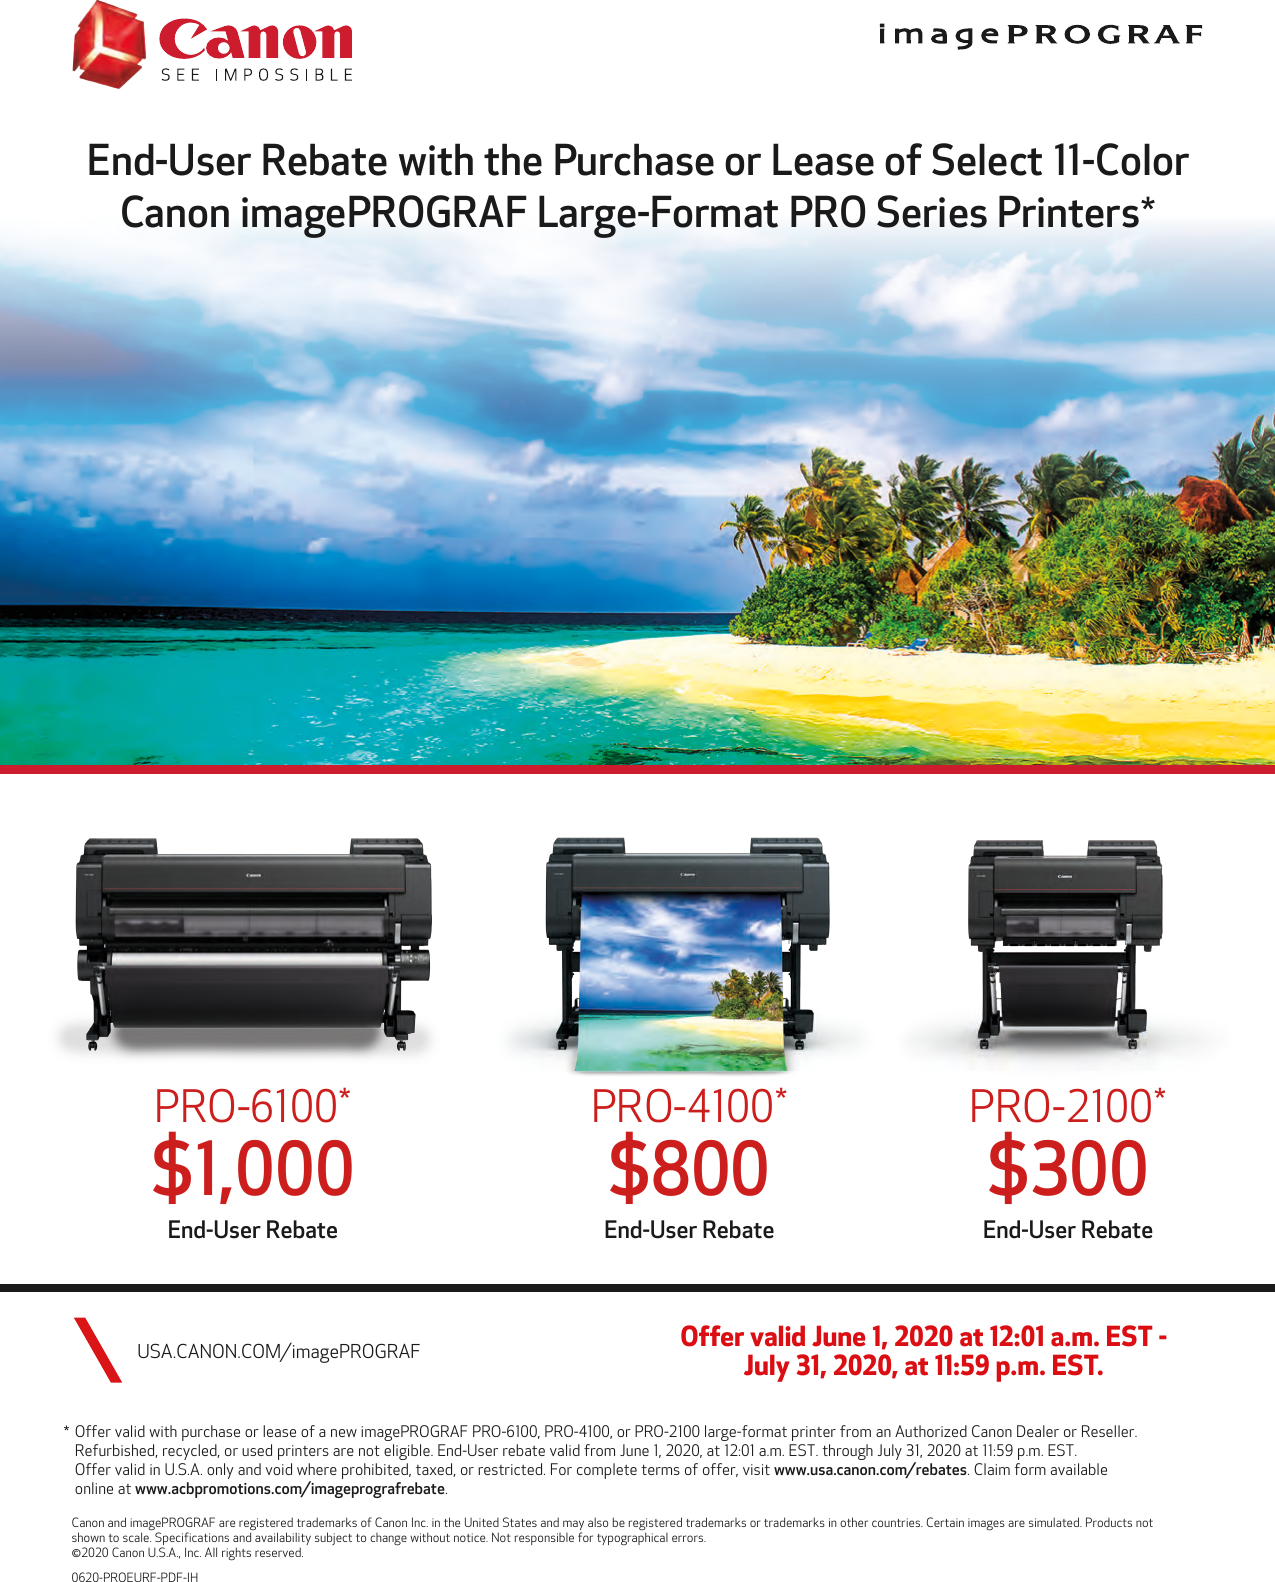 Canon ImagePROGRAF End User Rebate For PRO Series Flyer Large Format 